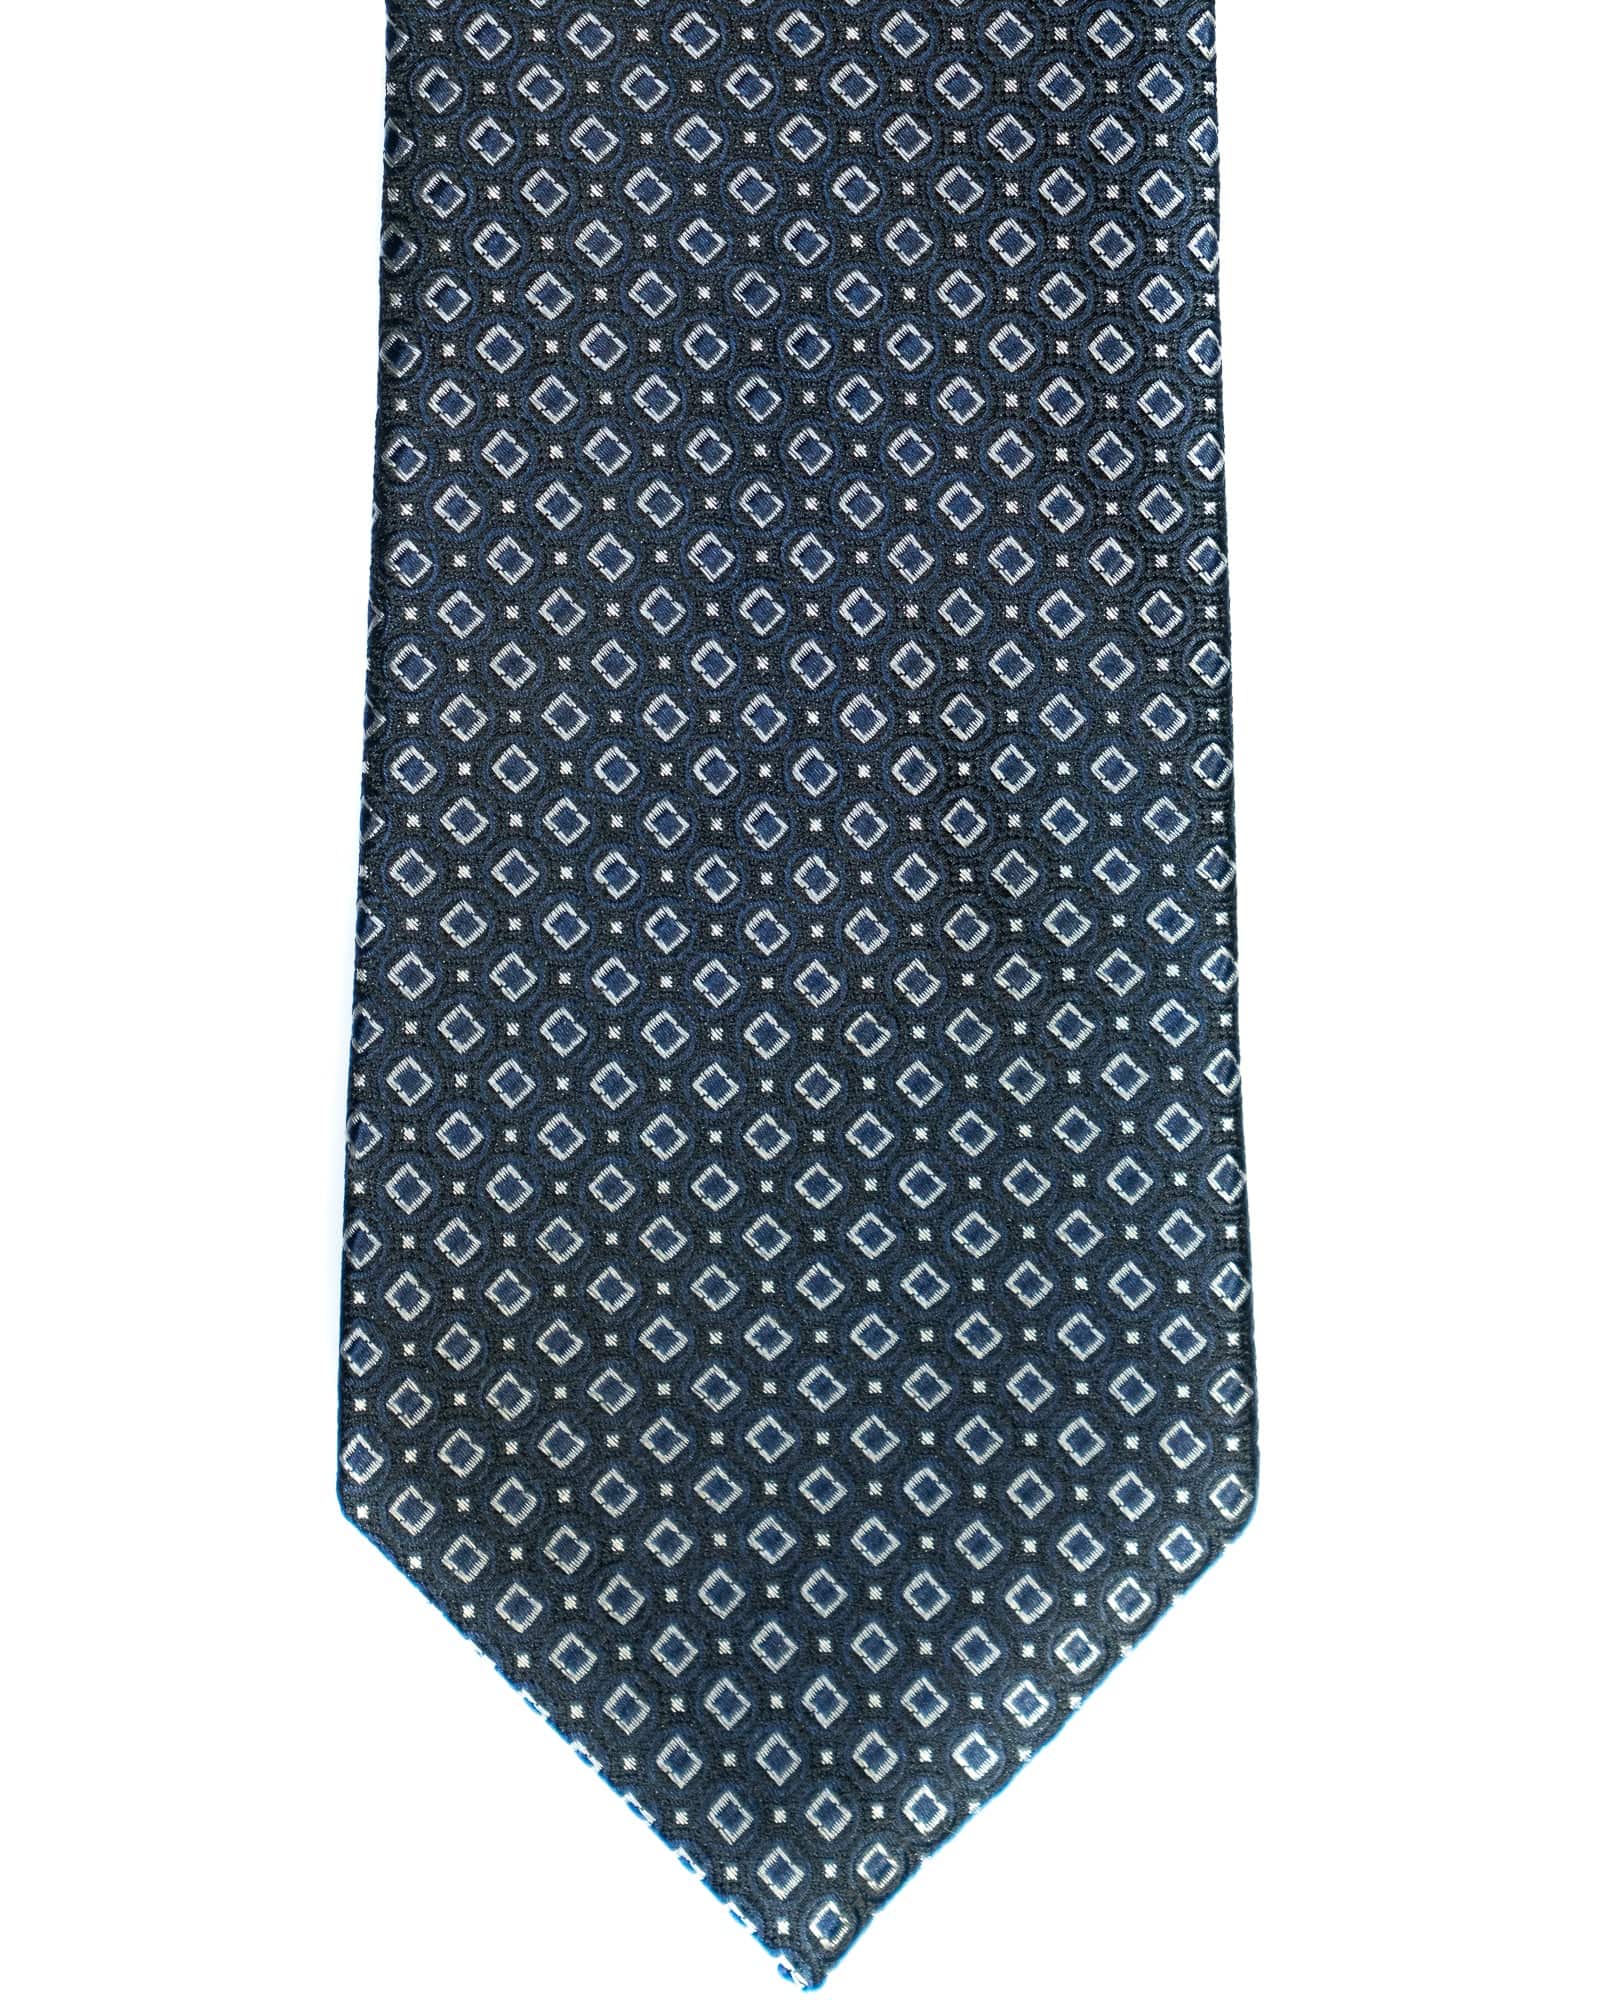 Silk Tie In Navy With Grey Neat Foulard Print - Rainwater's Men's Clothing and Tuxedo Rental